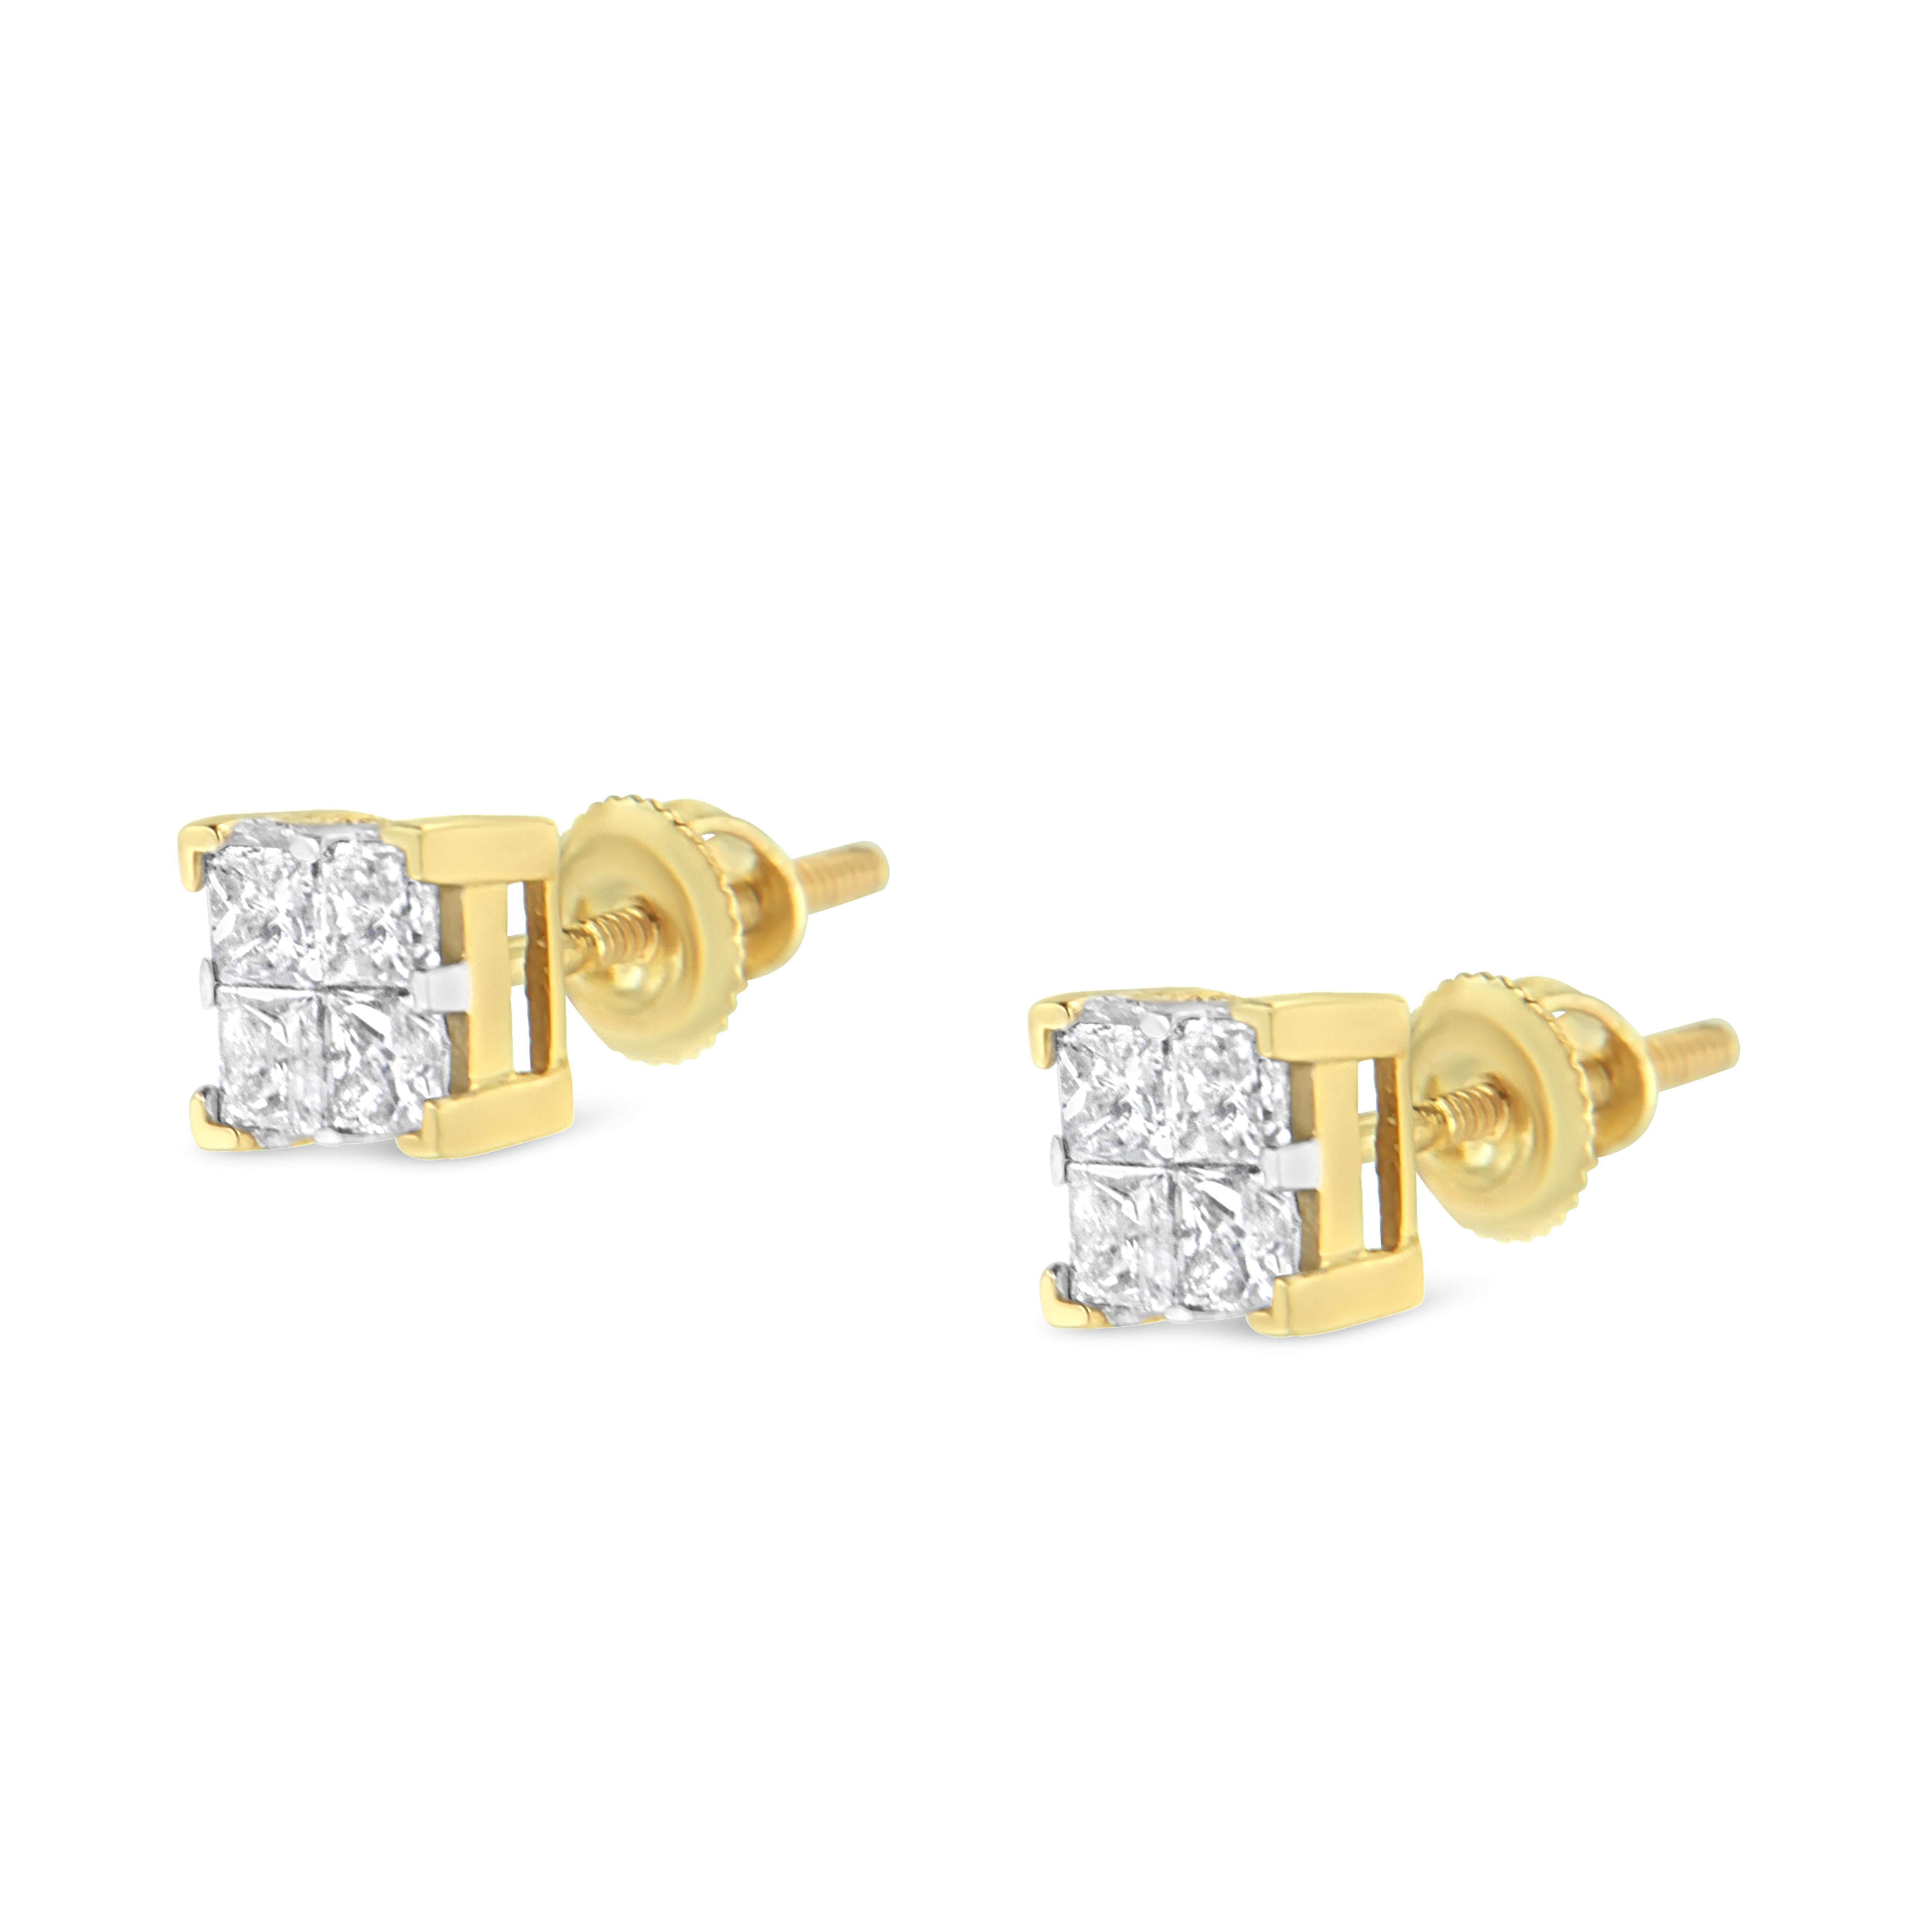 3 diamond earrings designs